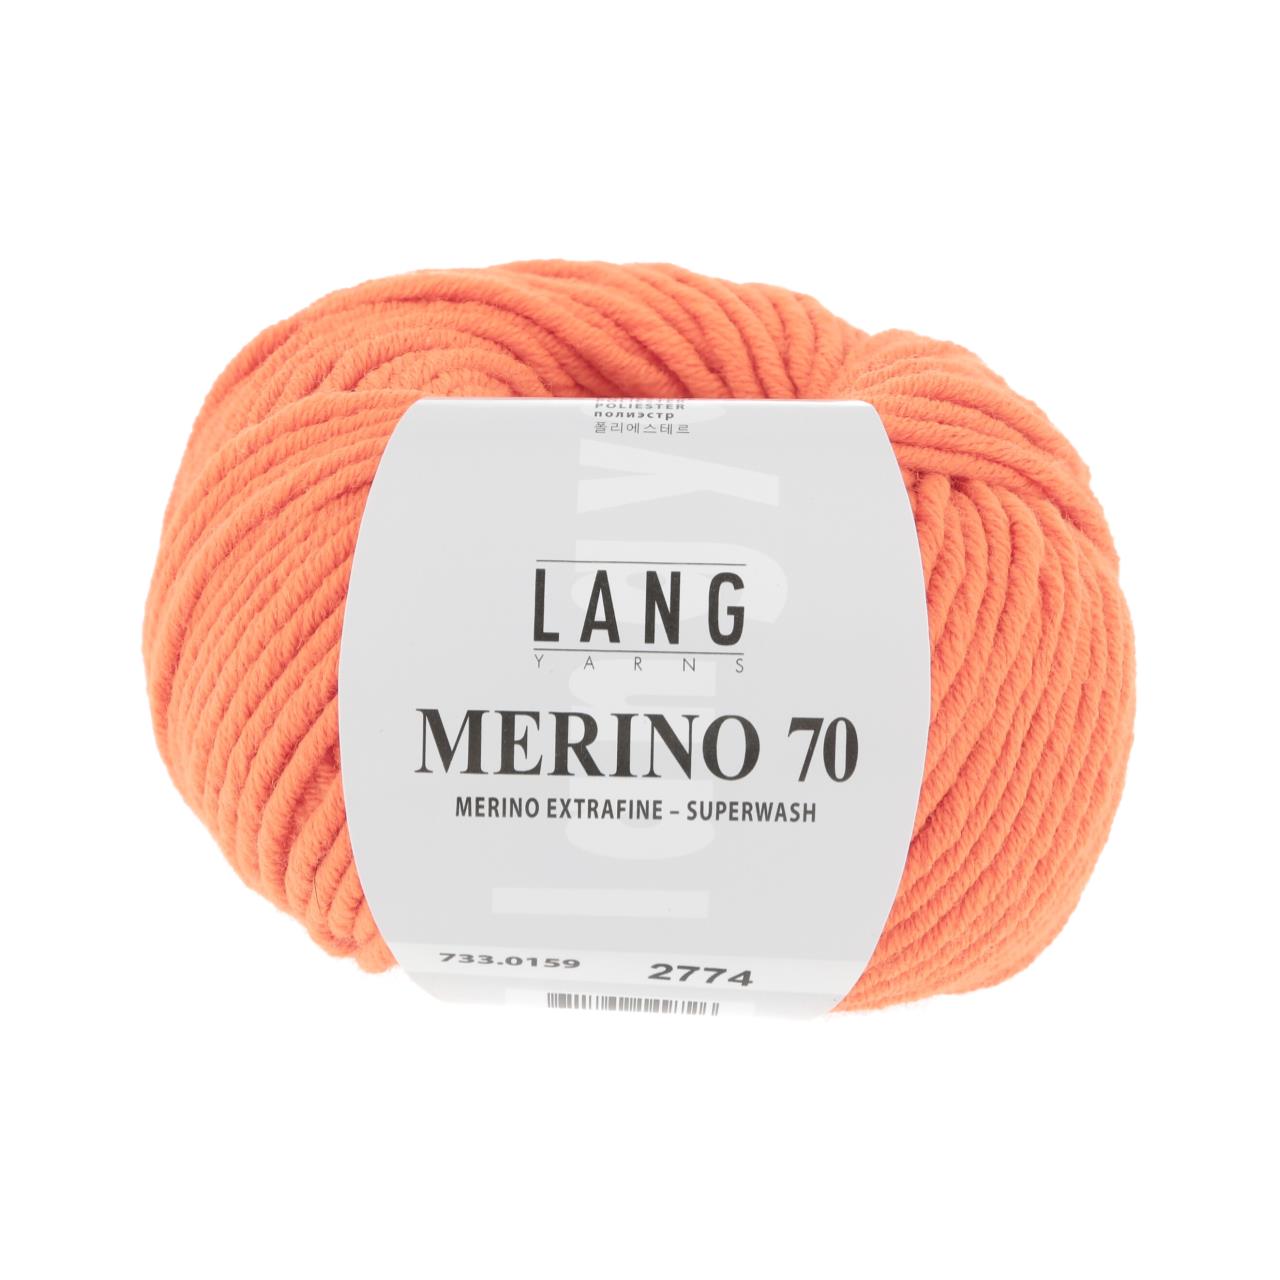 Merino 70 159 Orange Neon